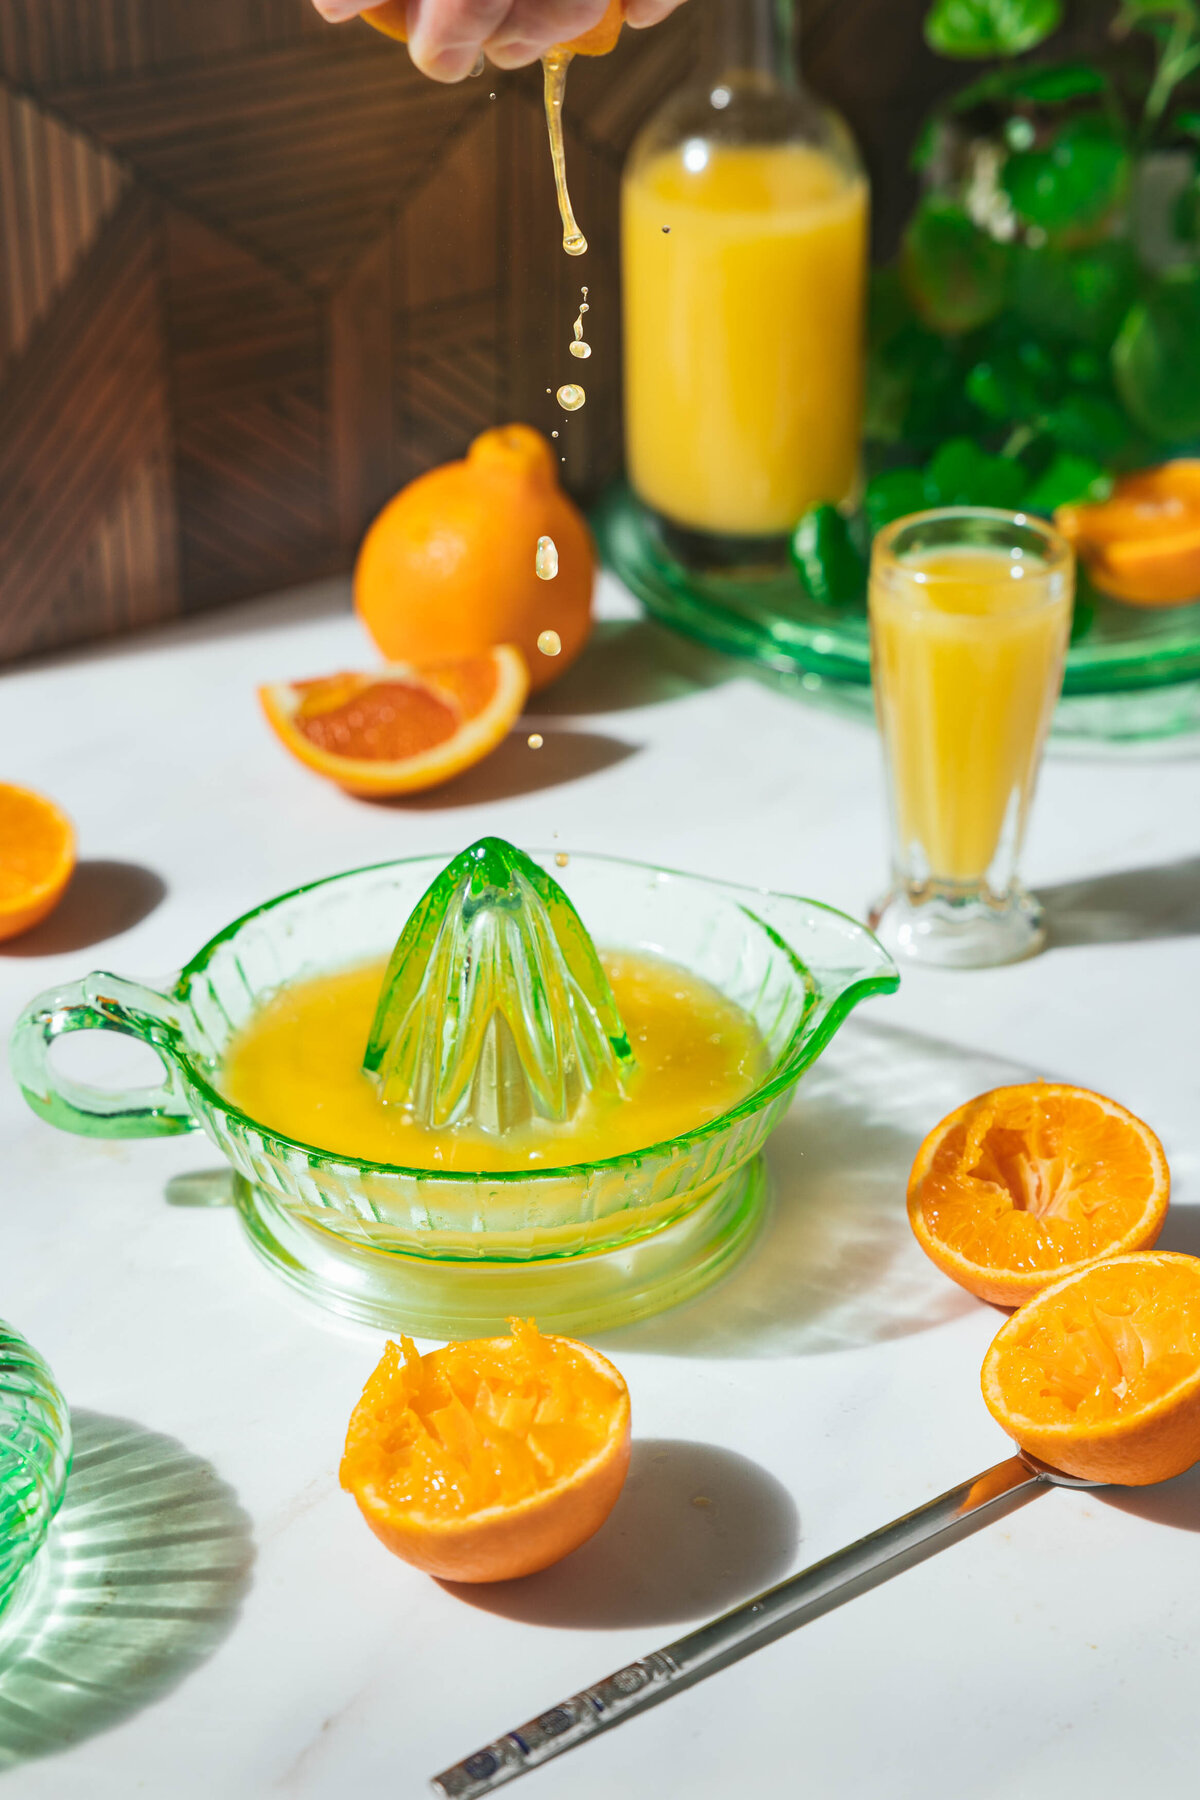 Organic orange being squeezed into fresh juice.